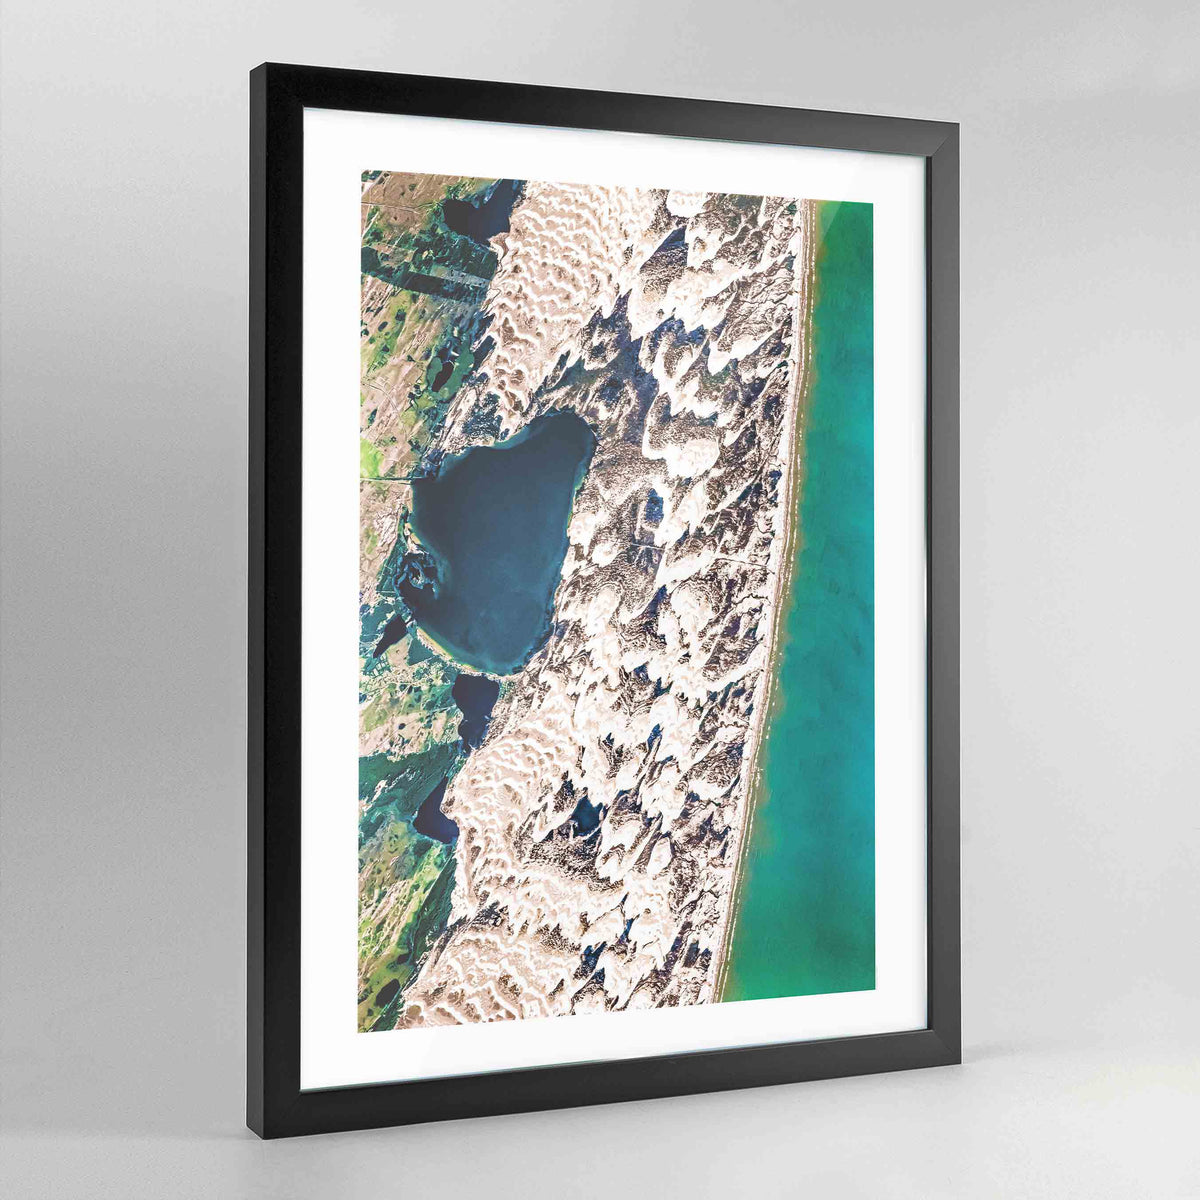 Lagoa Dos Barros Earth Photography Art Print - Framed